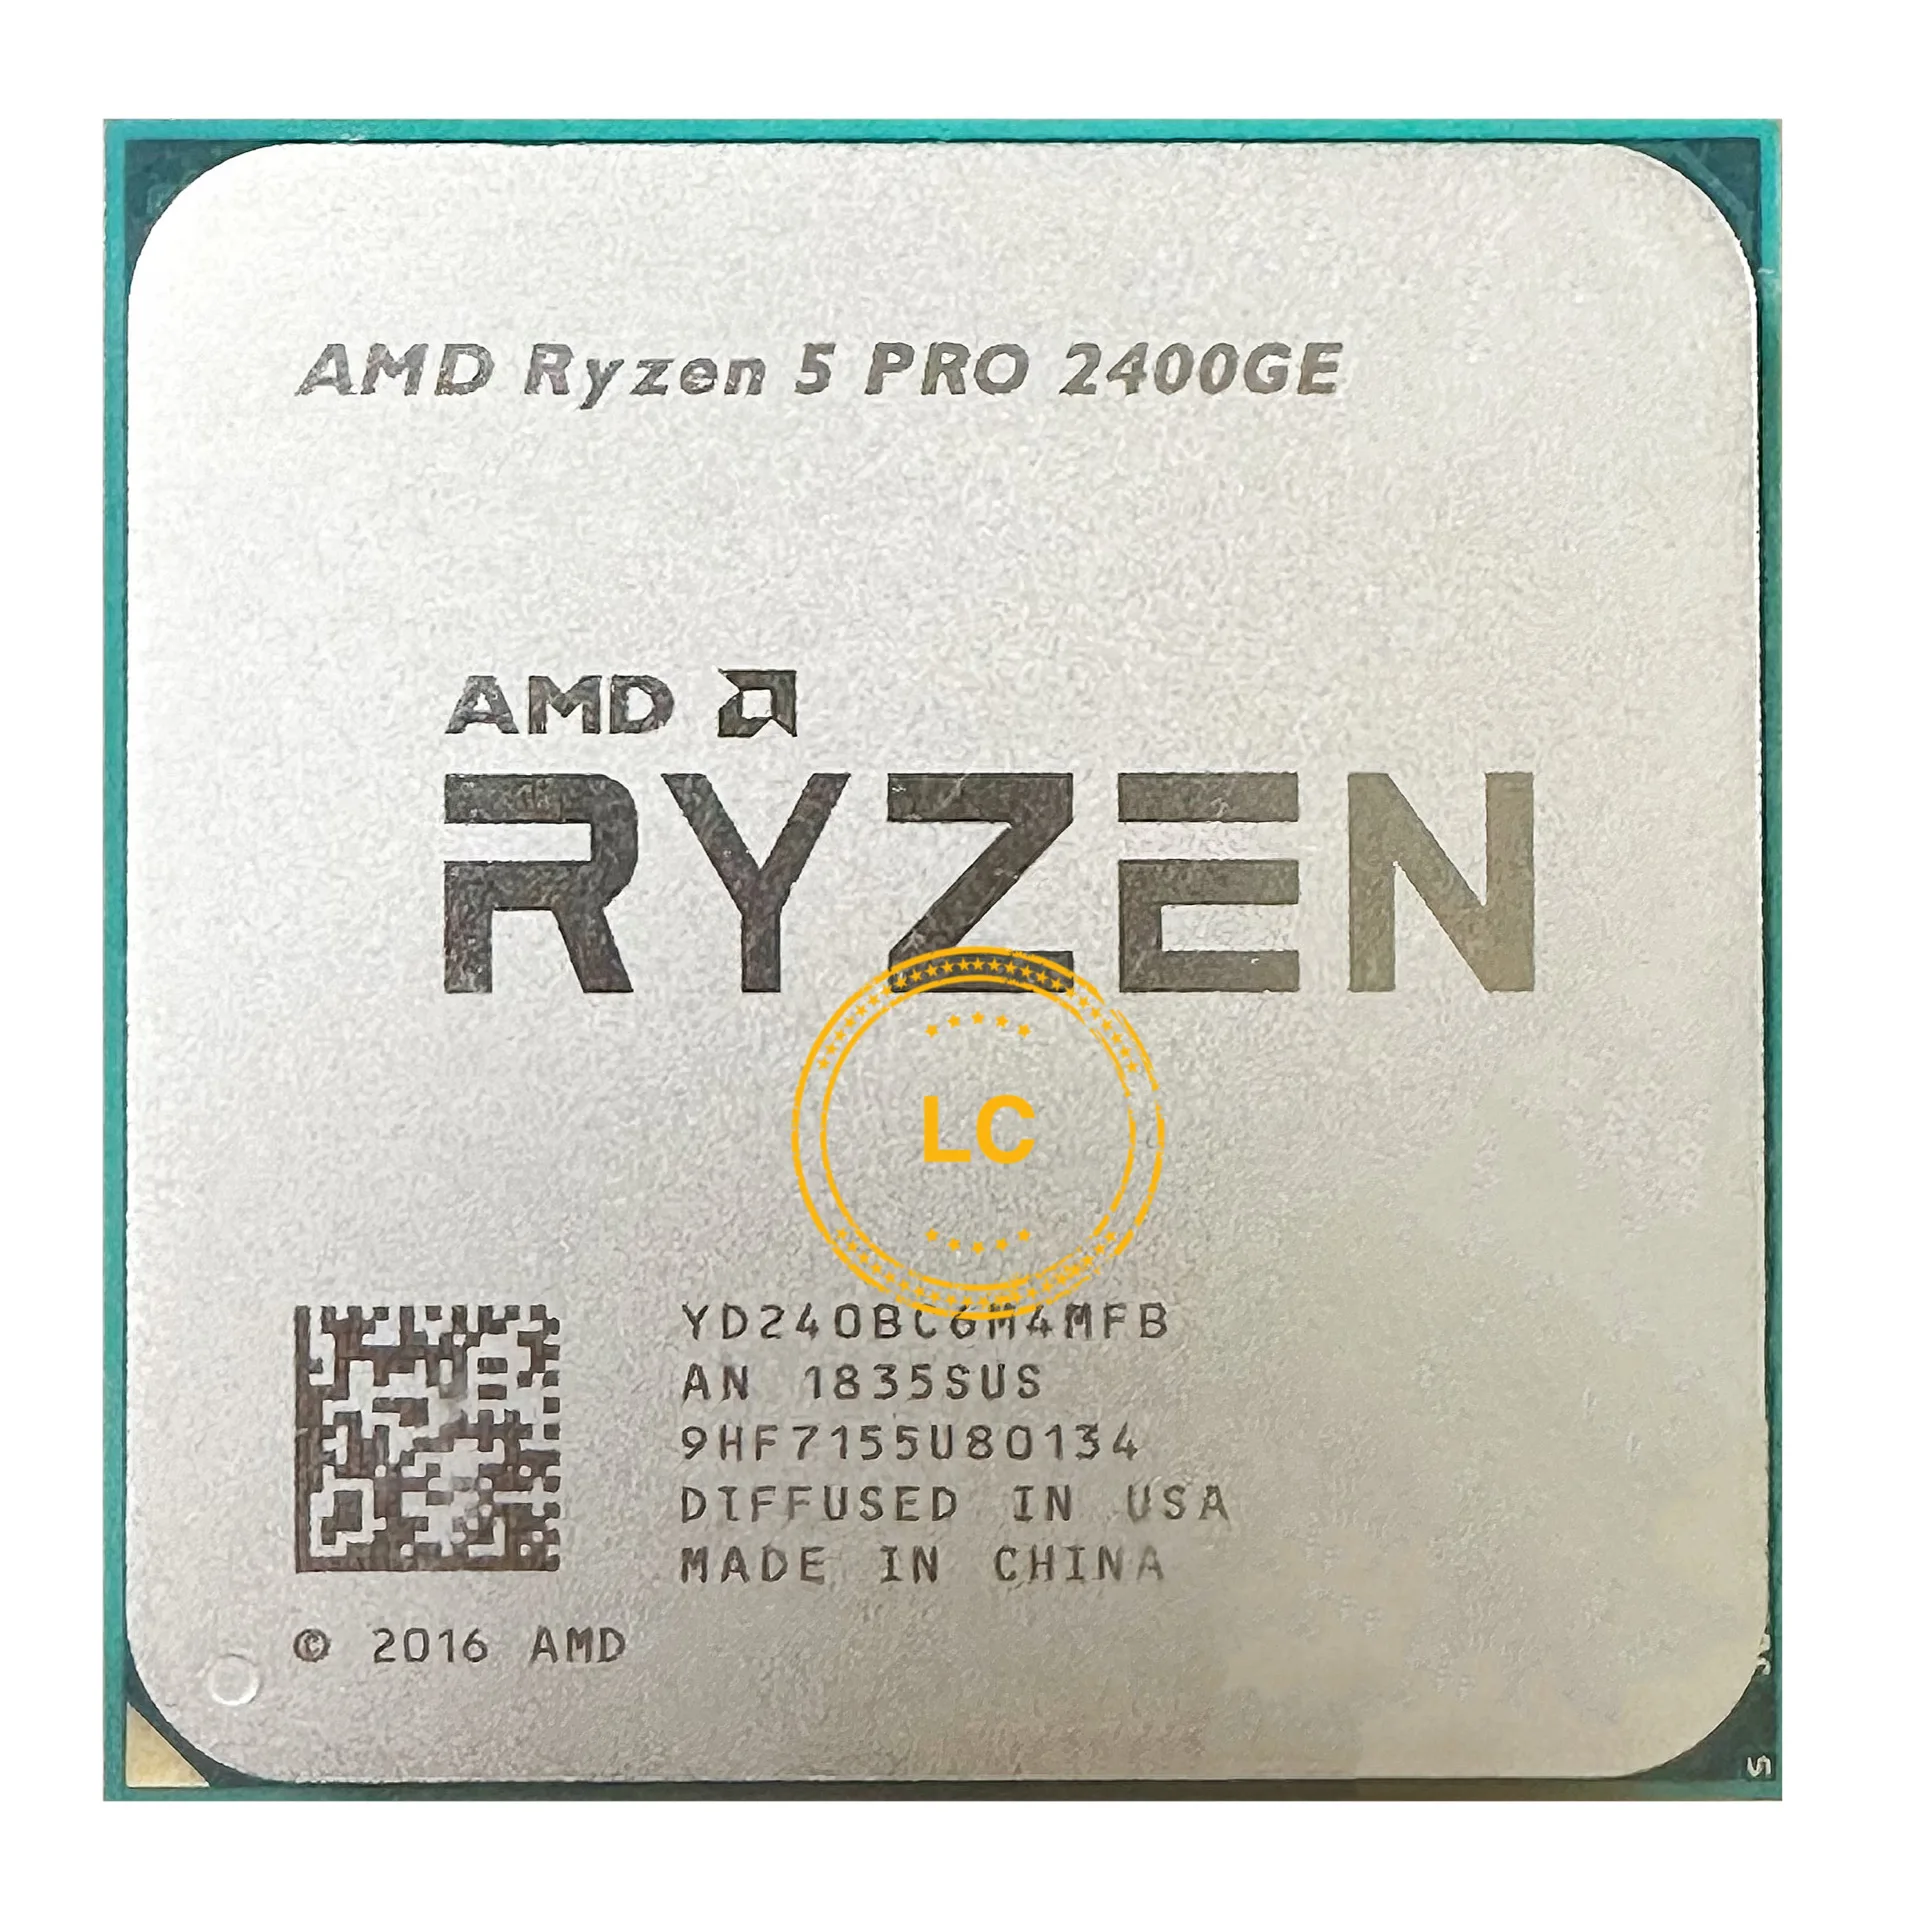 3 pro 4350g. Процессор AMD Ryzen 3 Pro 4350g OEM. AMD Ryzen 3 Pro 4350g наклейка. Процессор AMD Ryzen 3 4350g Pro OEM 100-000000148. AMD Ryzen 3 Pro 4350g am4, 4 x 3800 МГЦ.